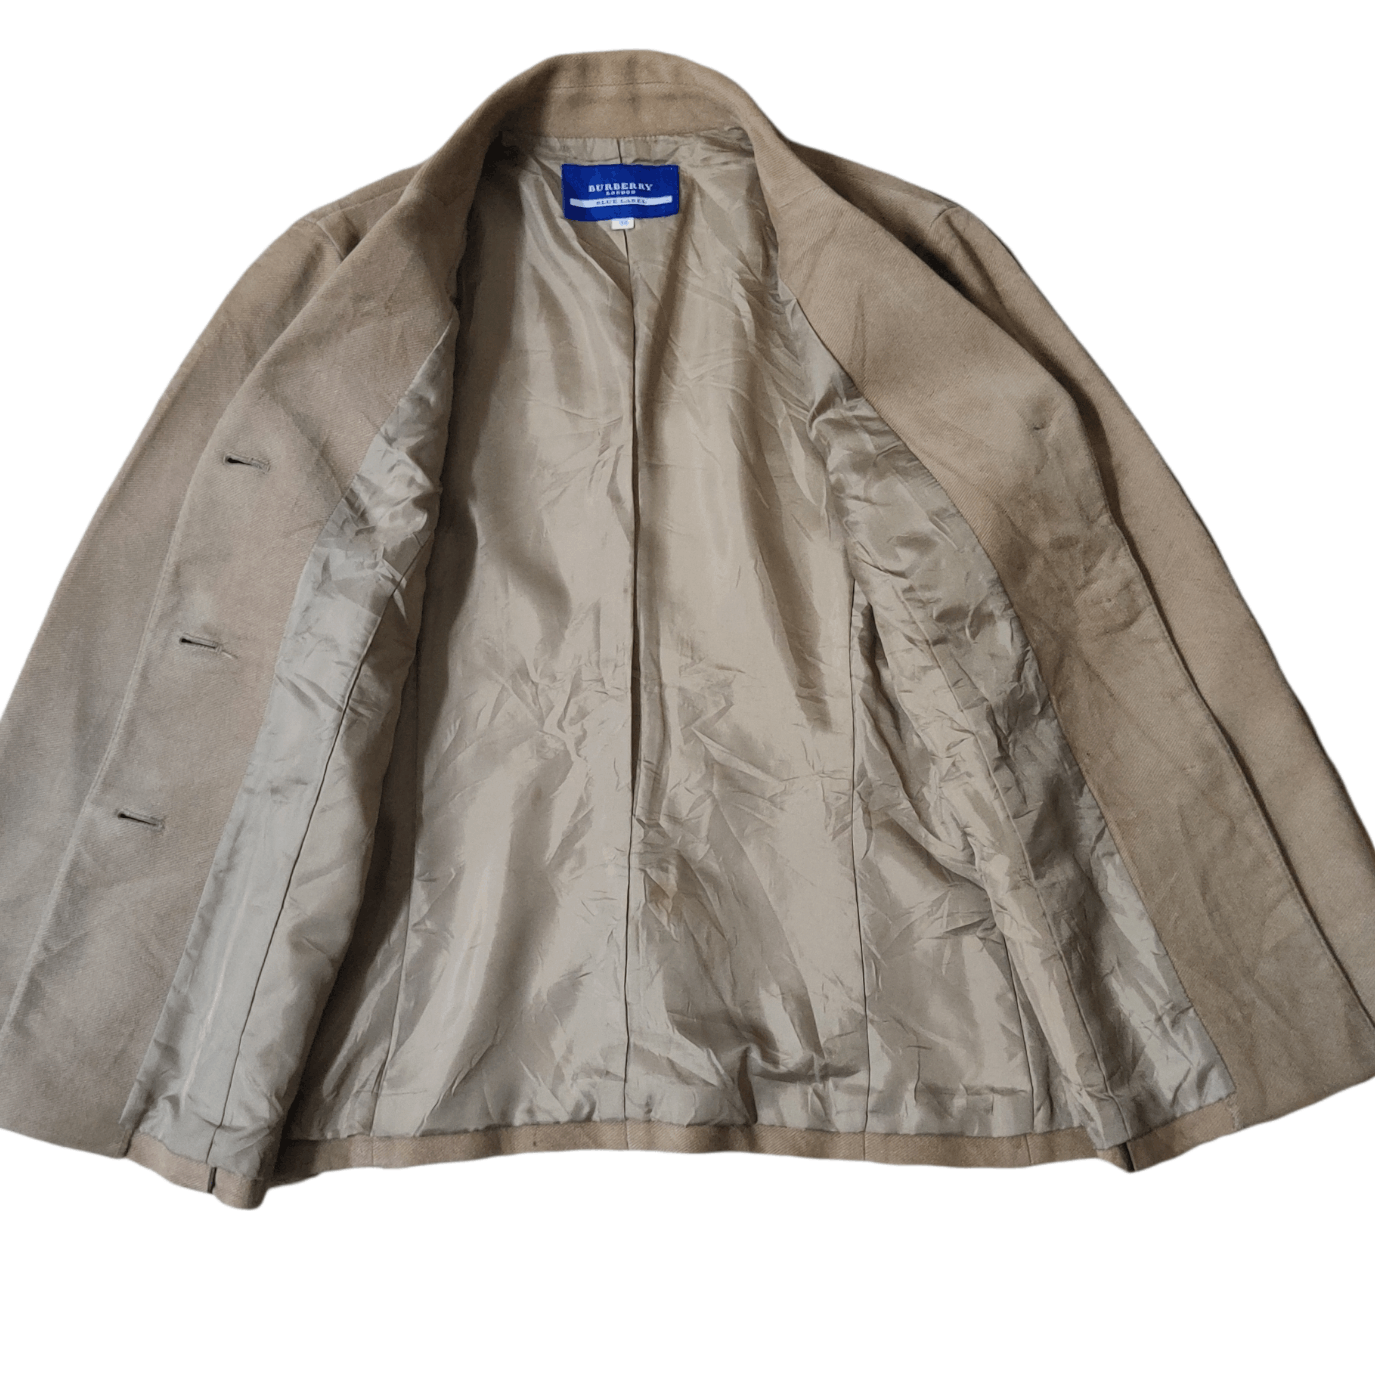 Burberry Blue Label Women's Coat Jacket - 5